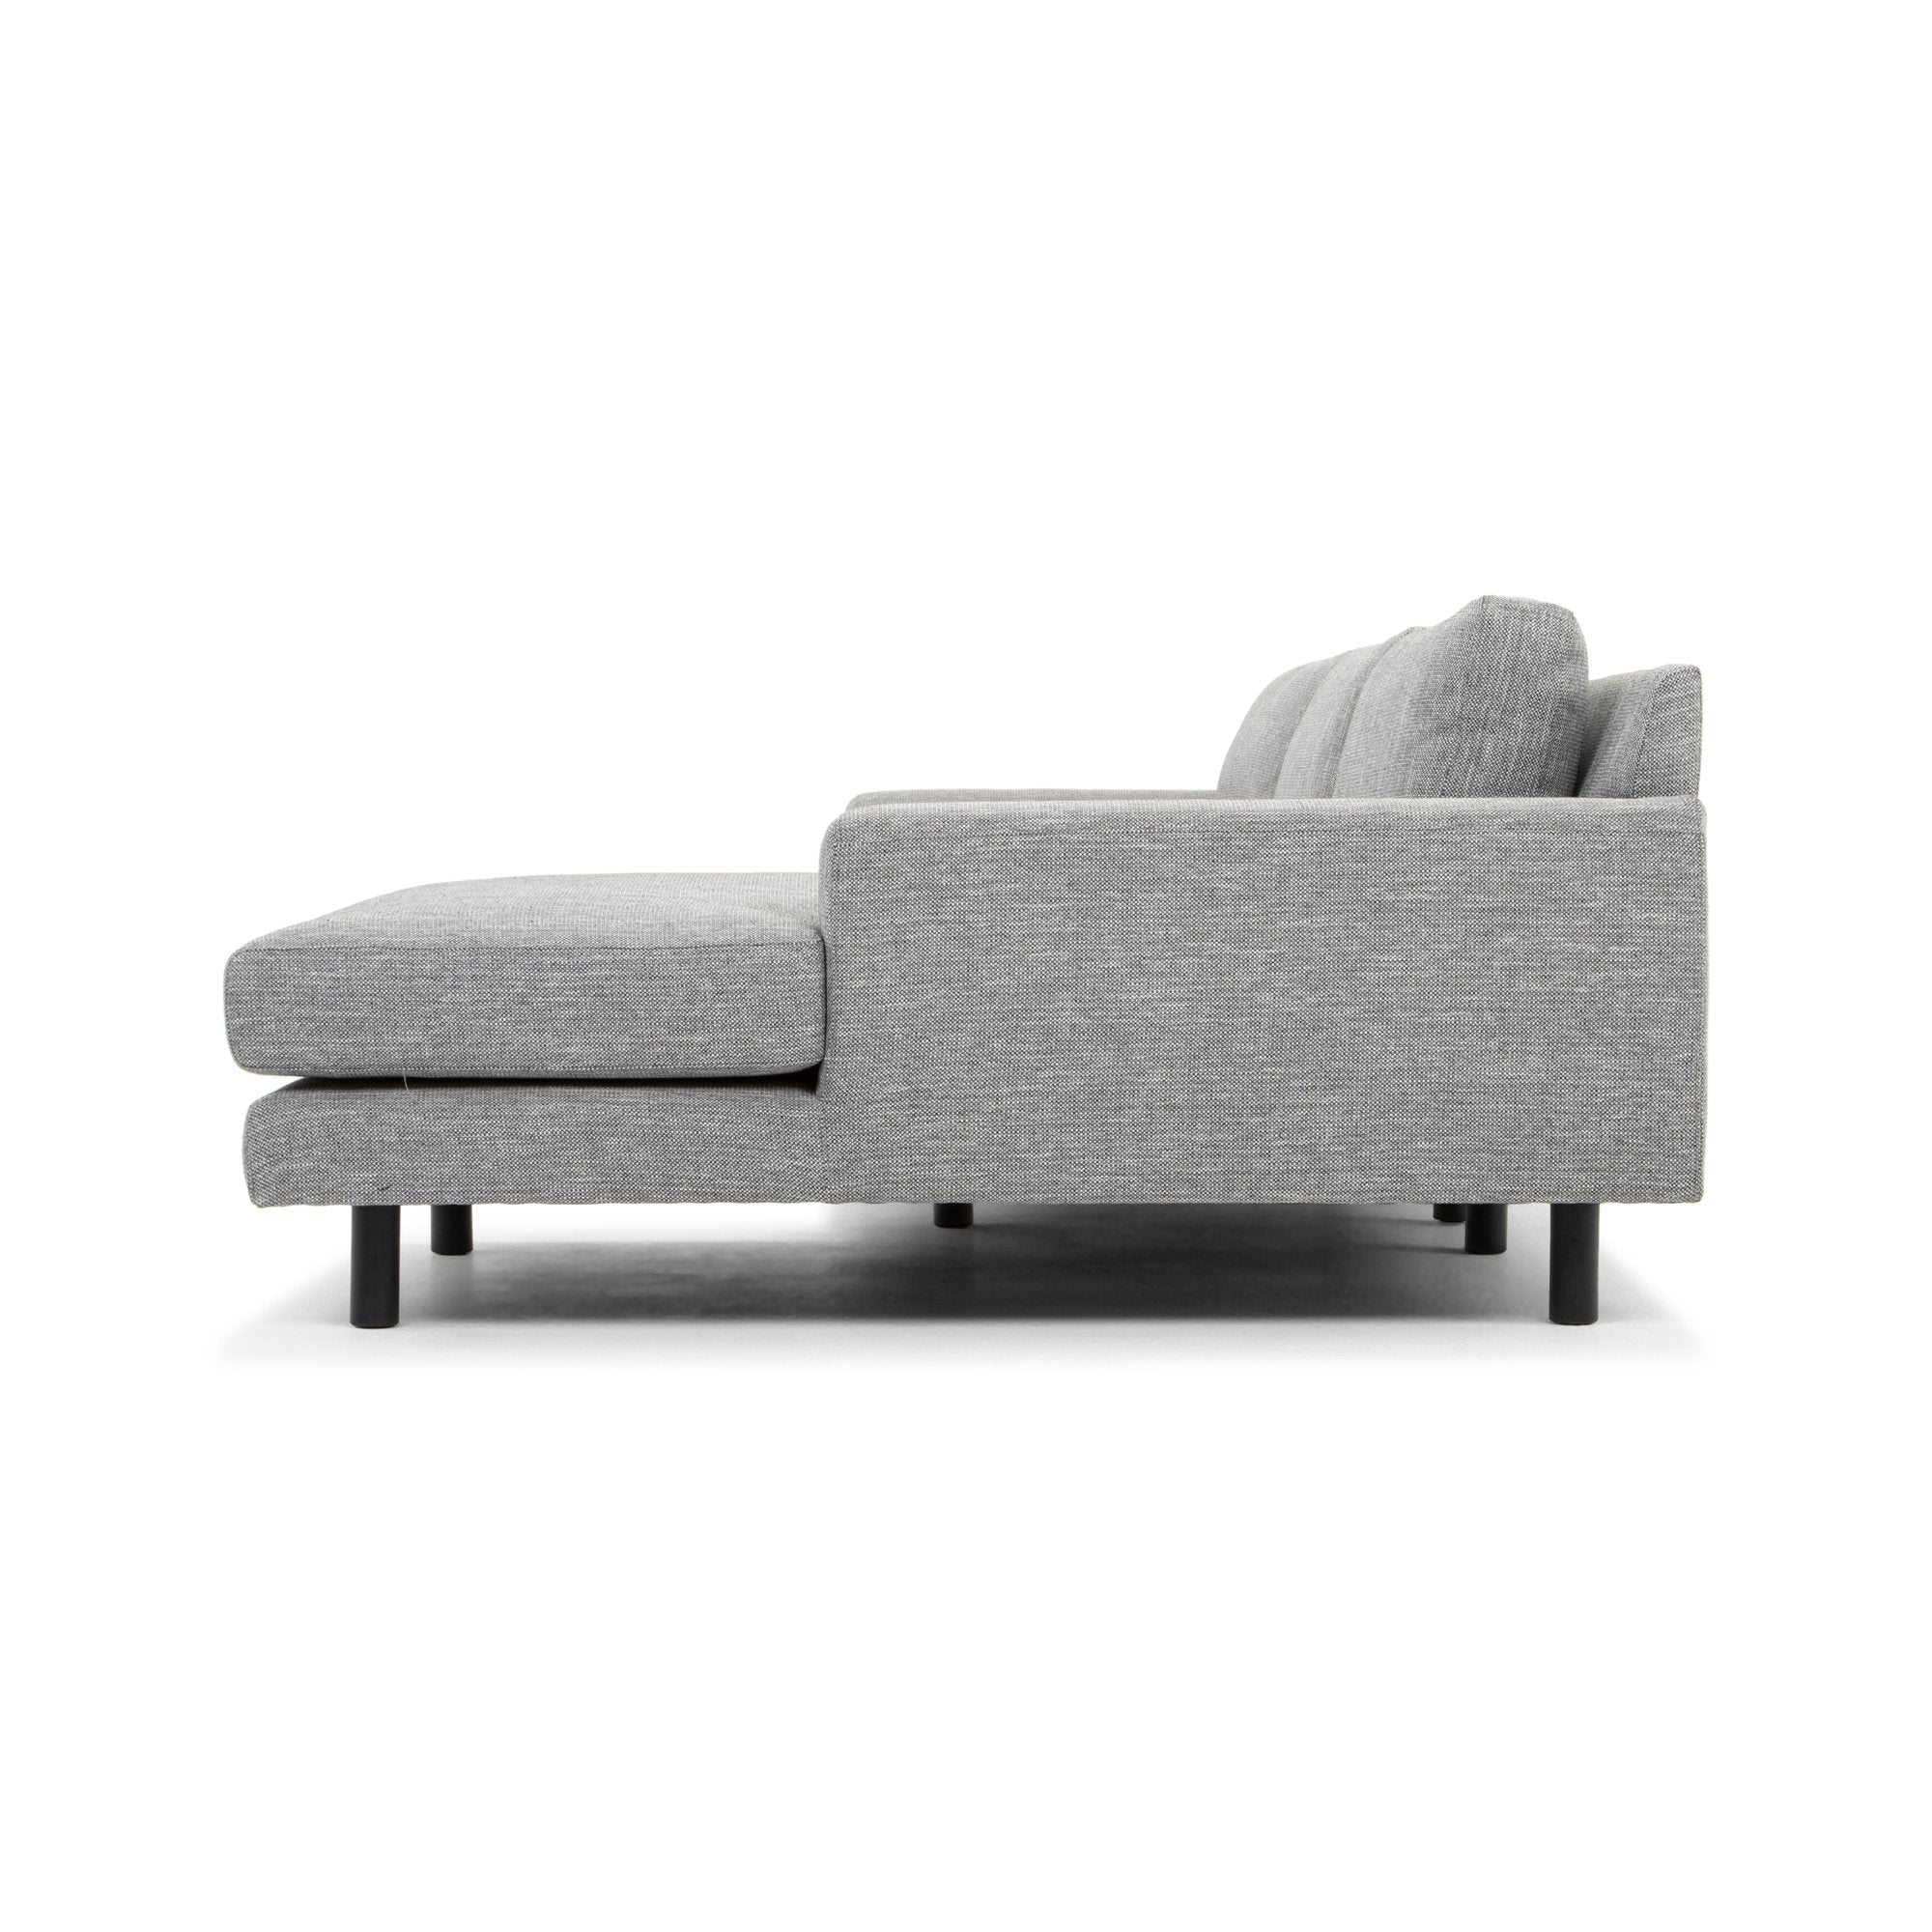 Sophia 3S Right Chaise Sofa - Graphite Grey - Sofas